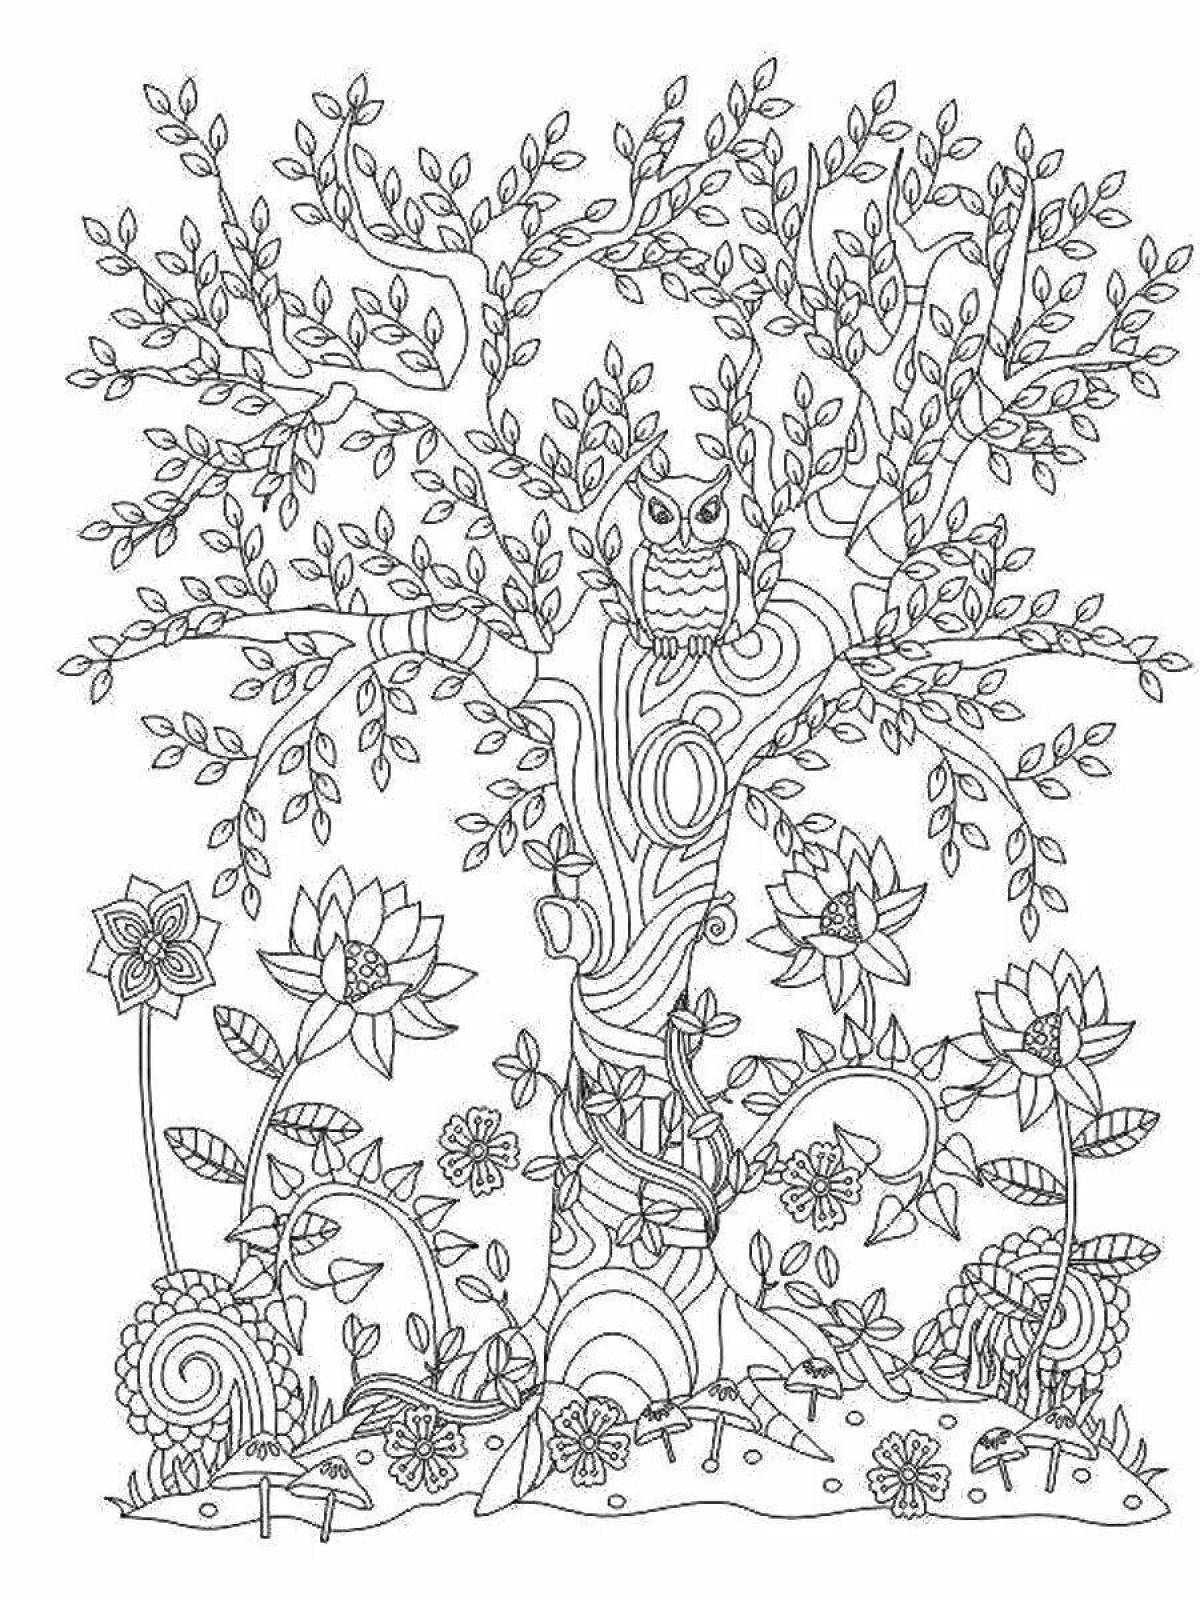 Exotic magic tree coloring book